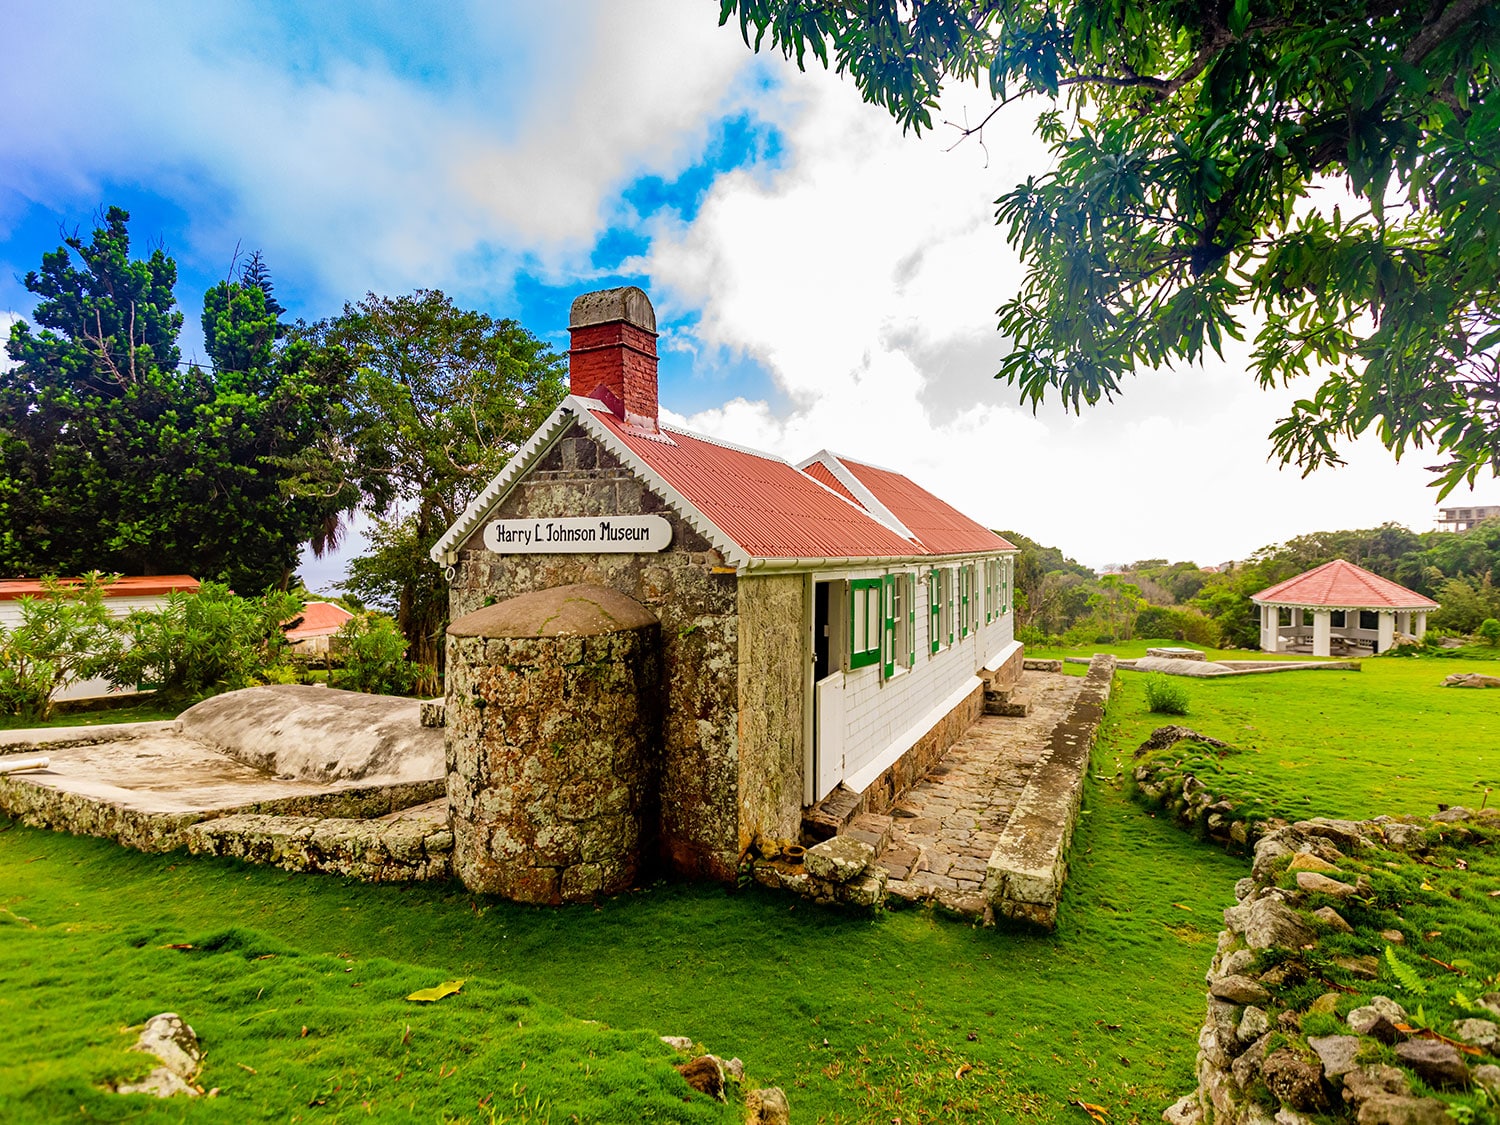 The Harry L. Johnson Museum on the tiny Dutch Caribbean island of Saba.